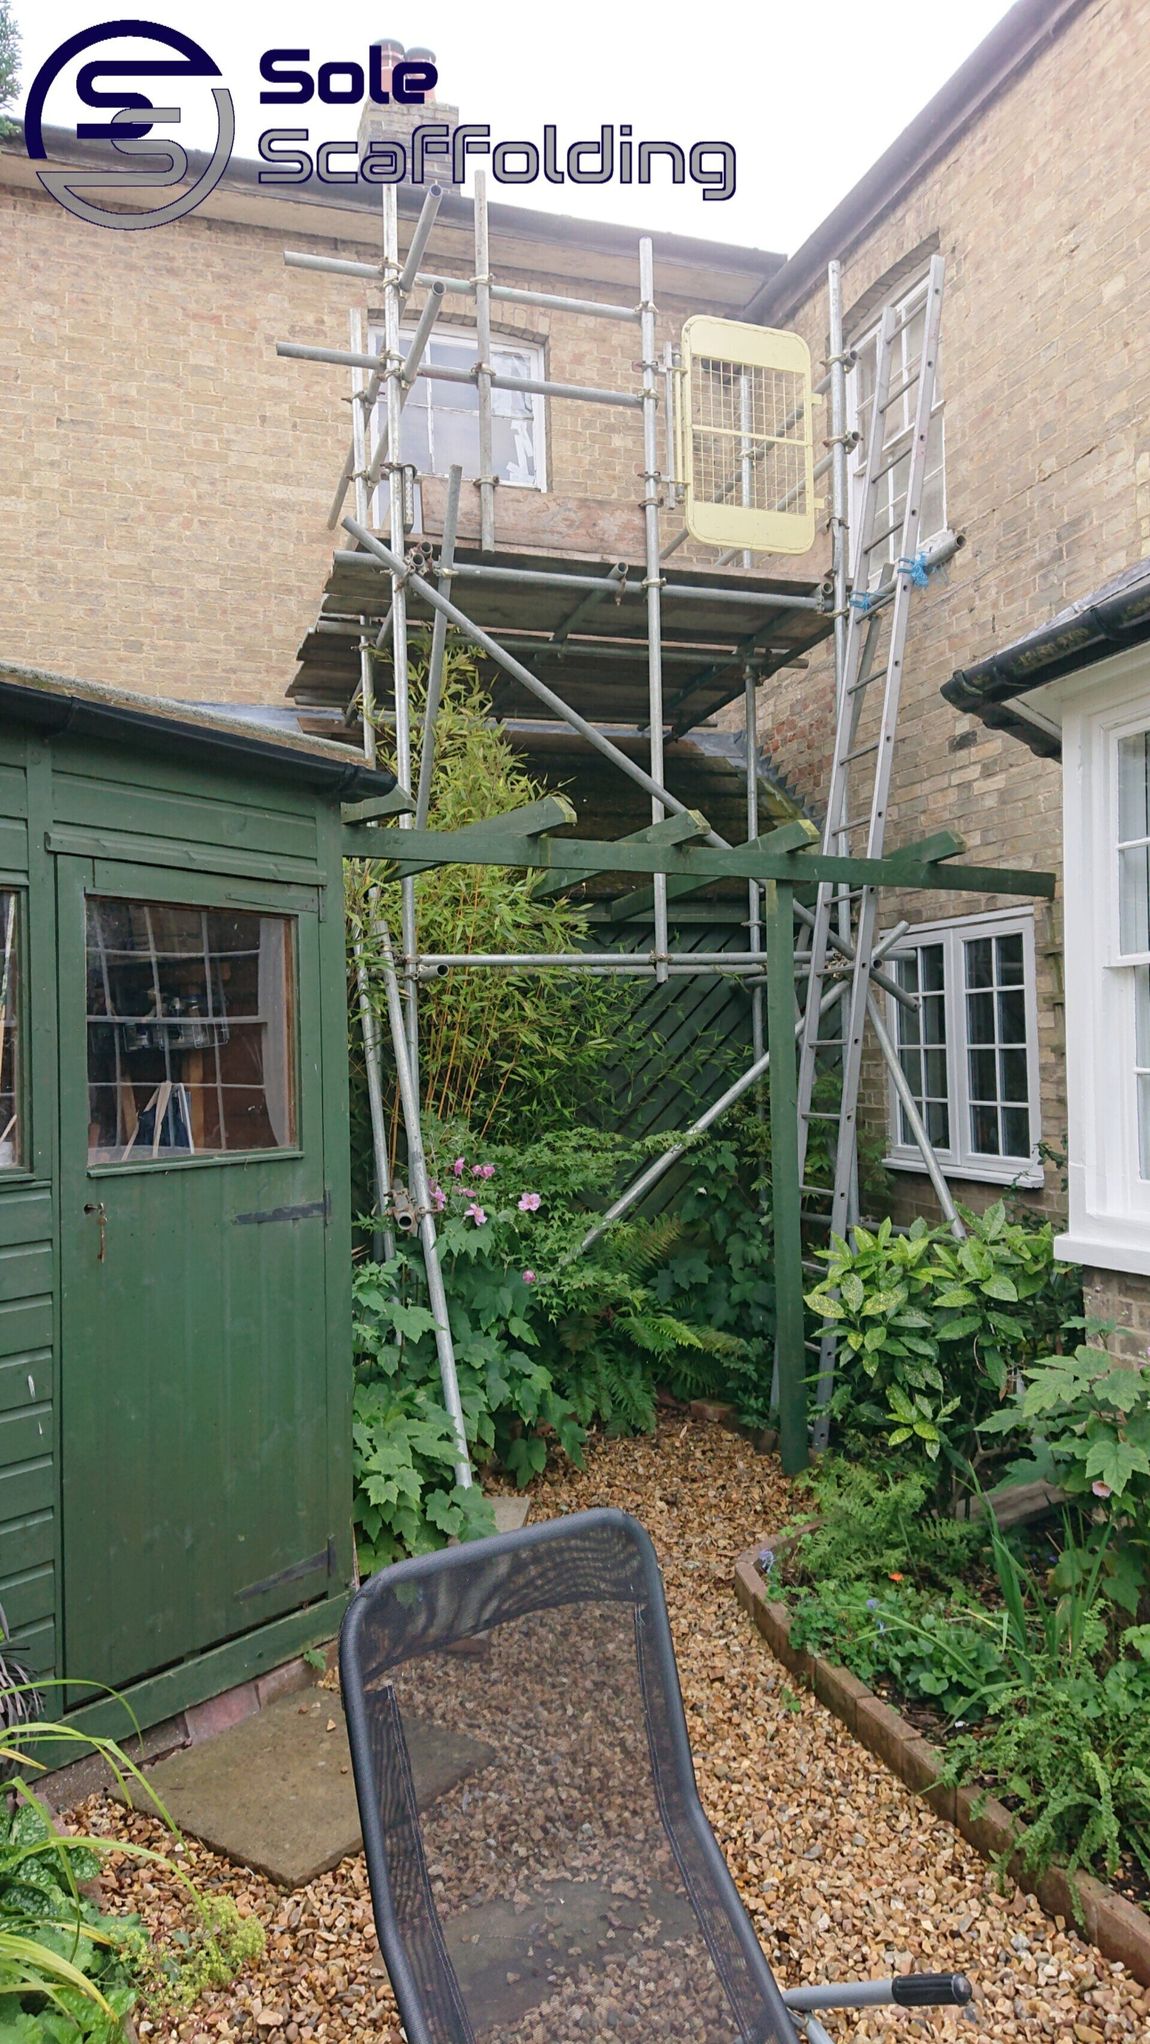 sole scaffolding - scaffold for  window repair in Somersham